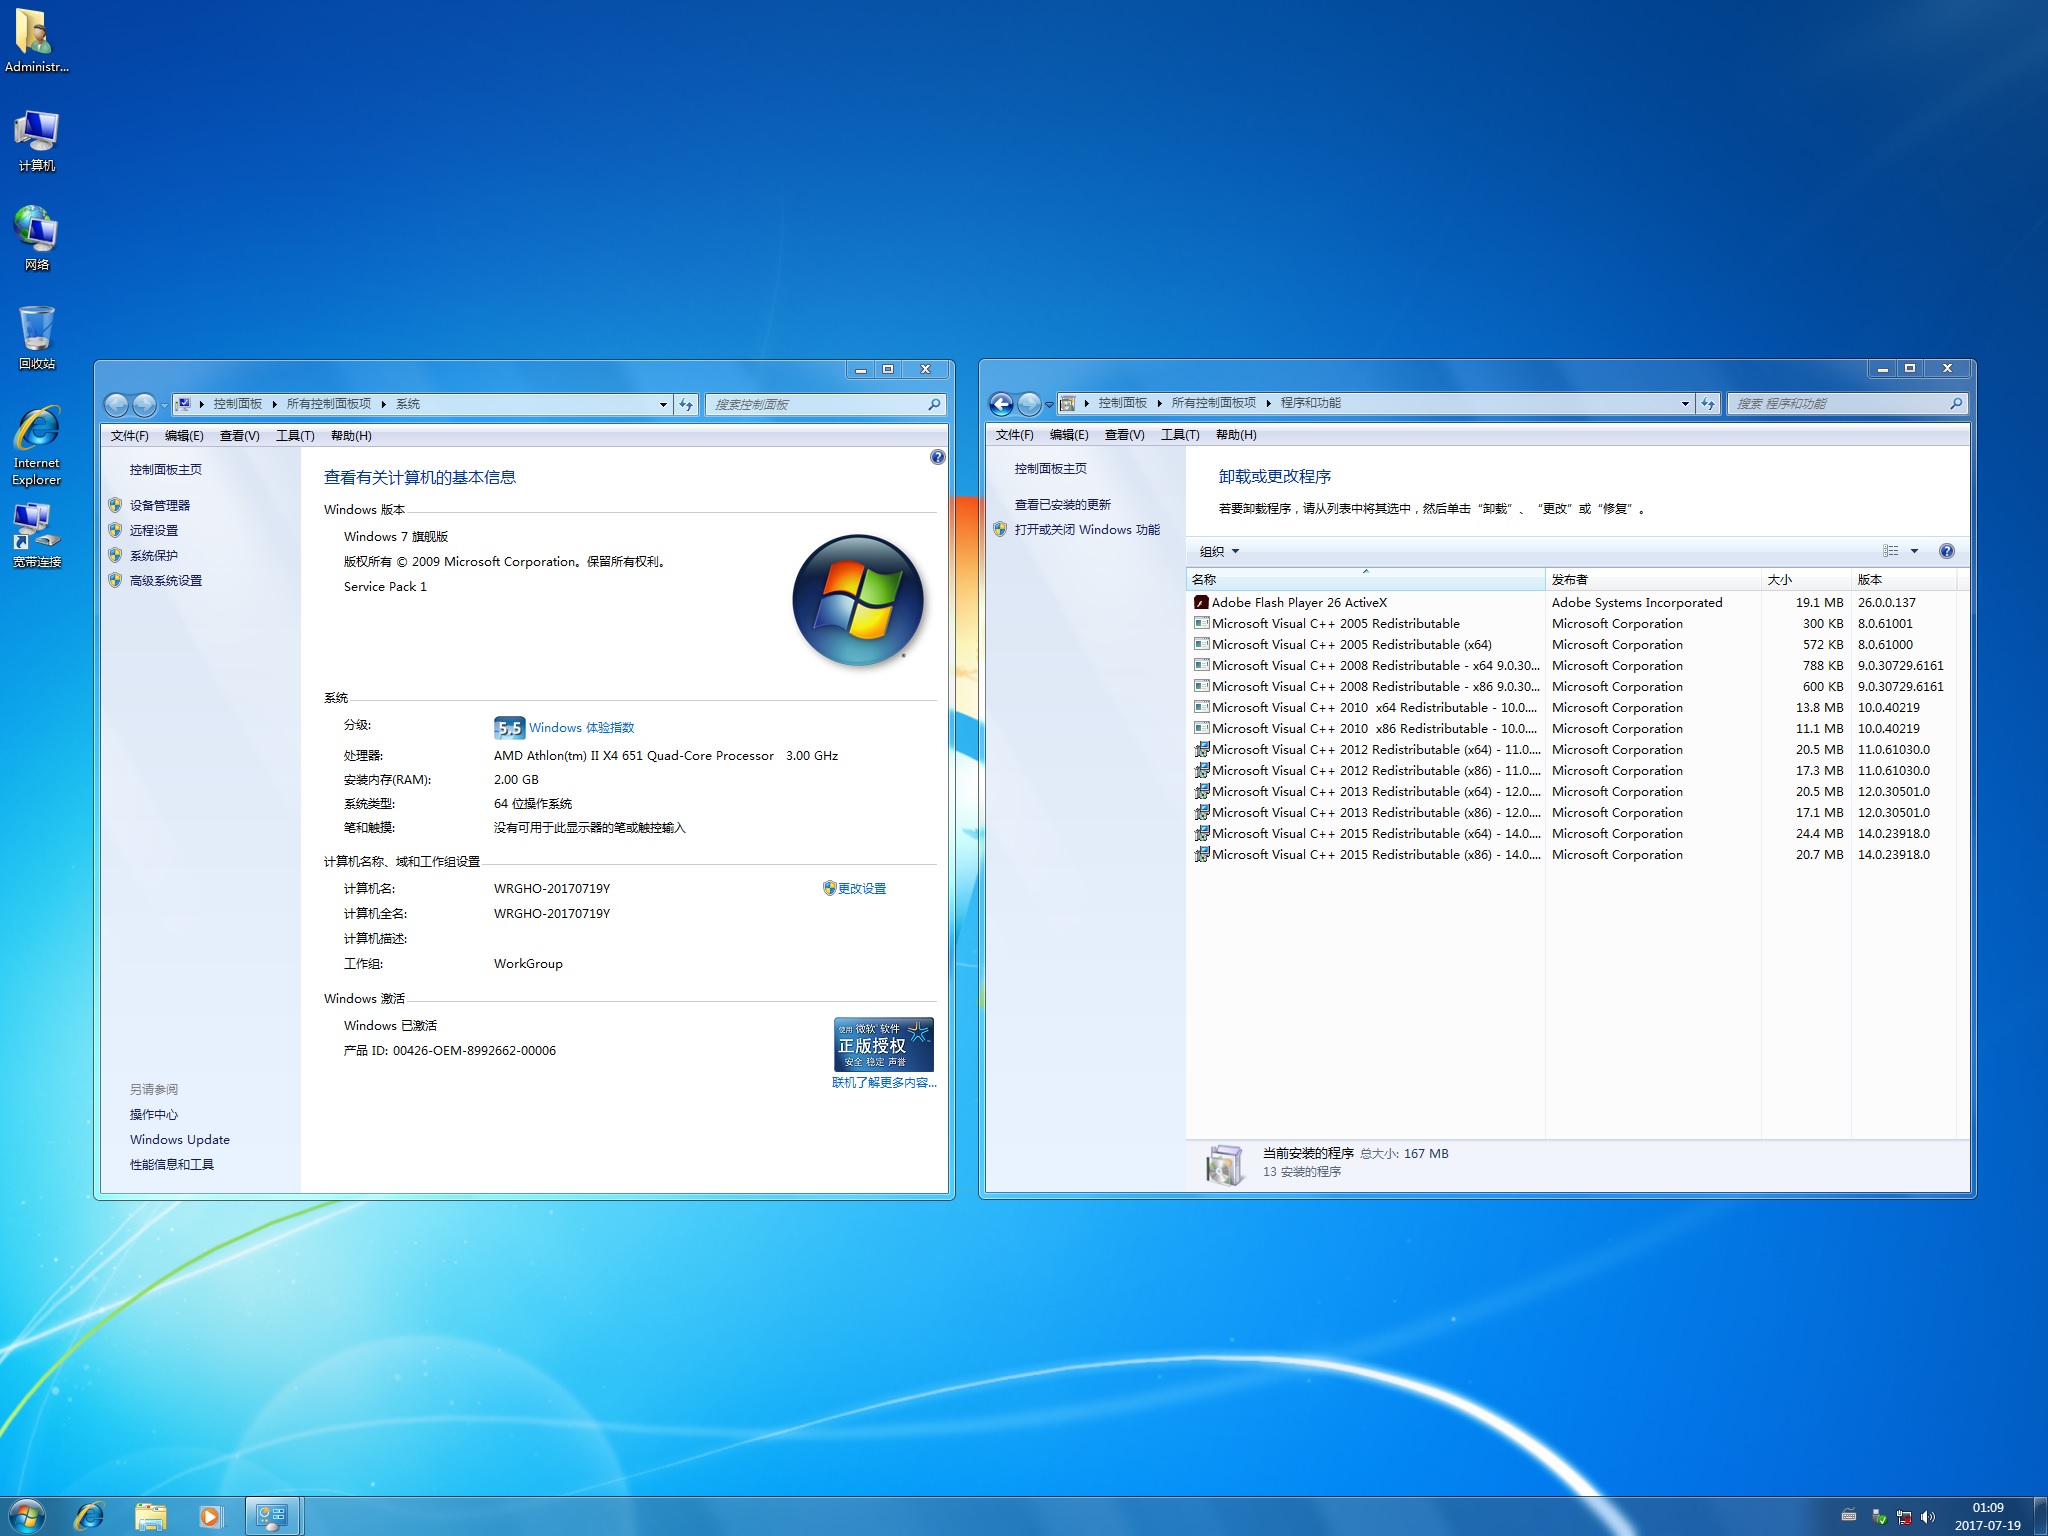 Windows7旗舰版精简版 - 轮回阁